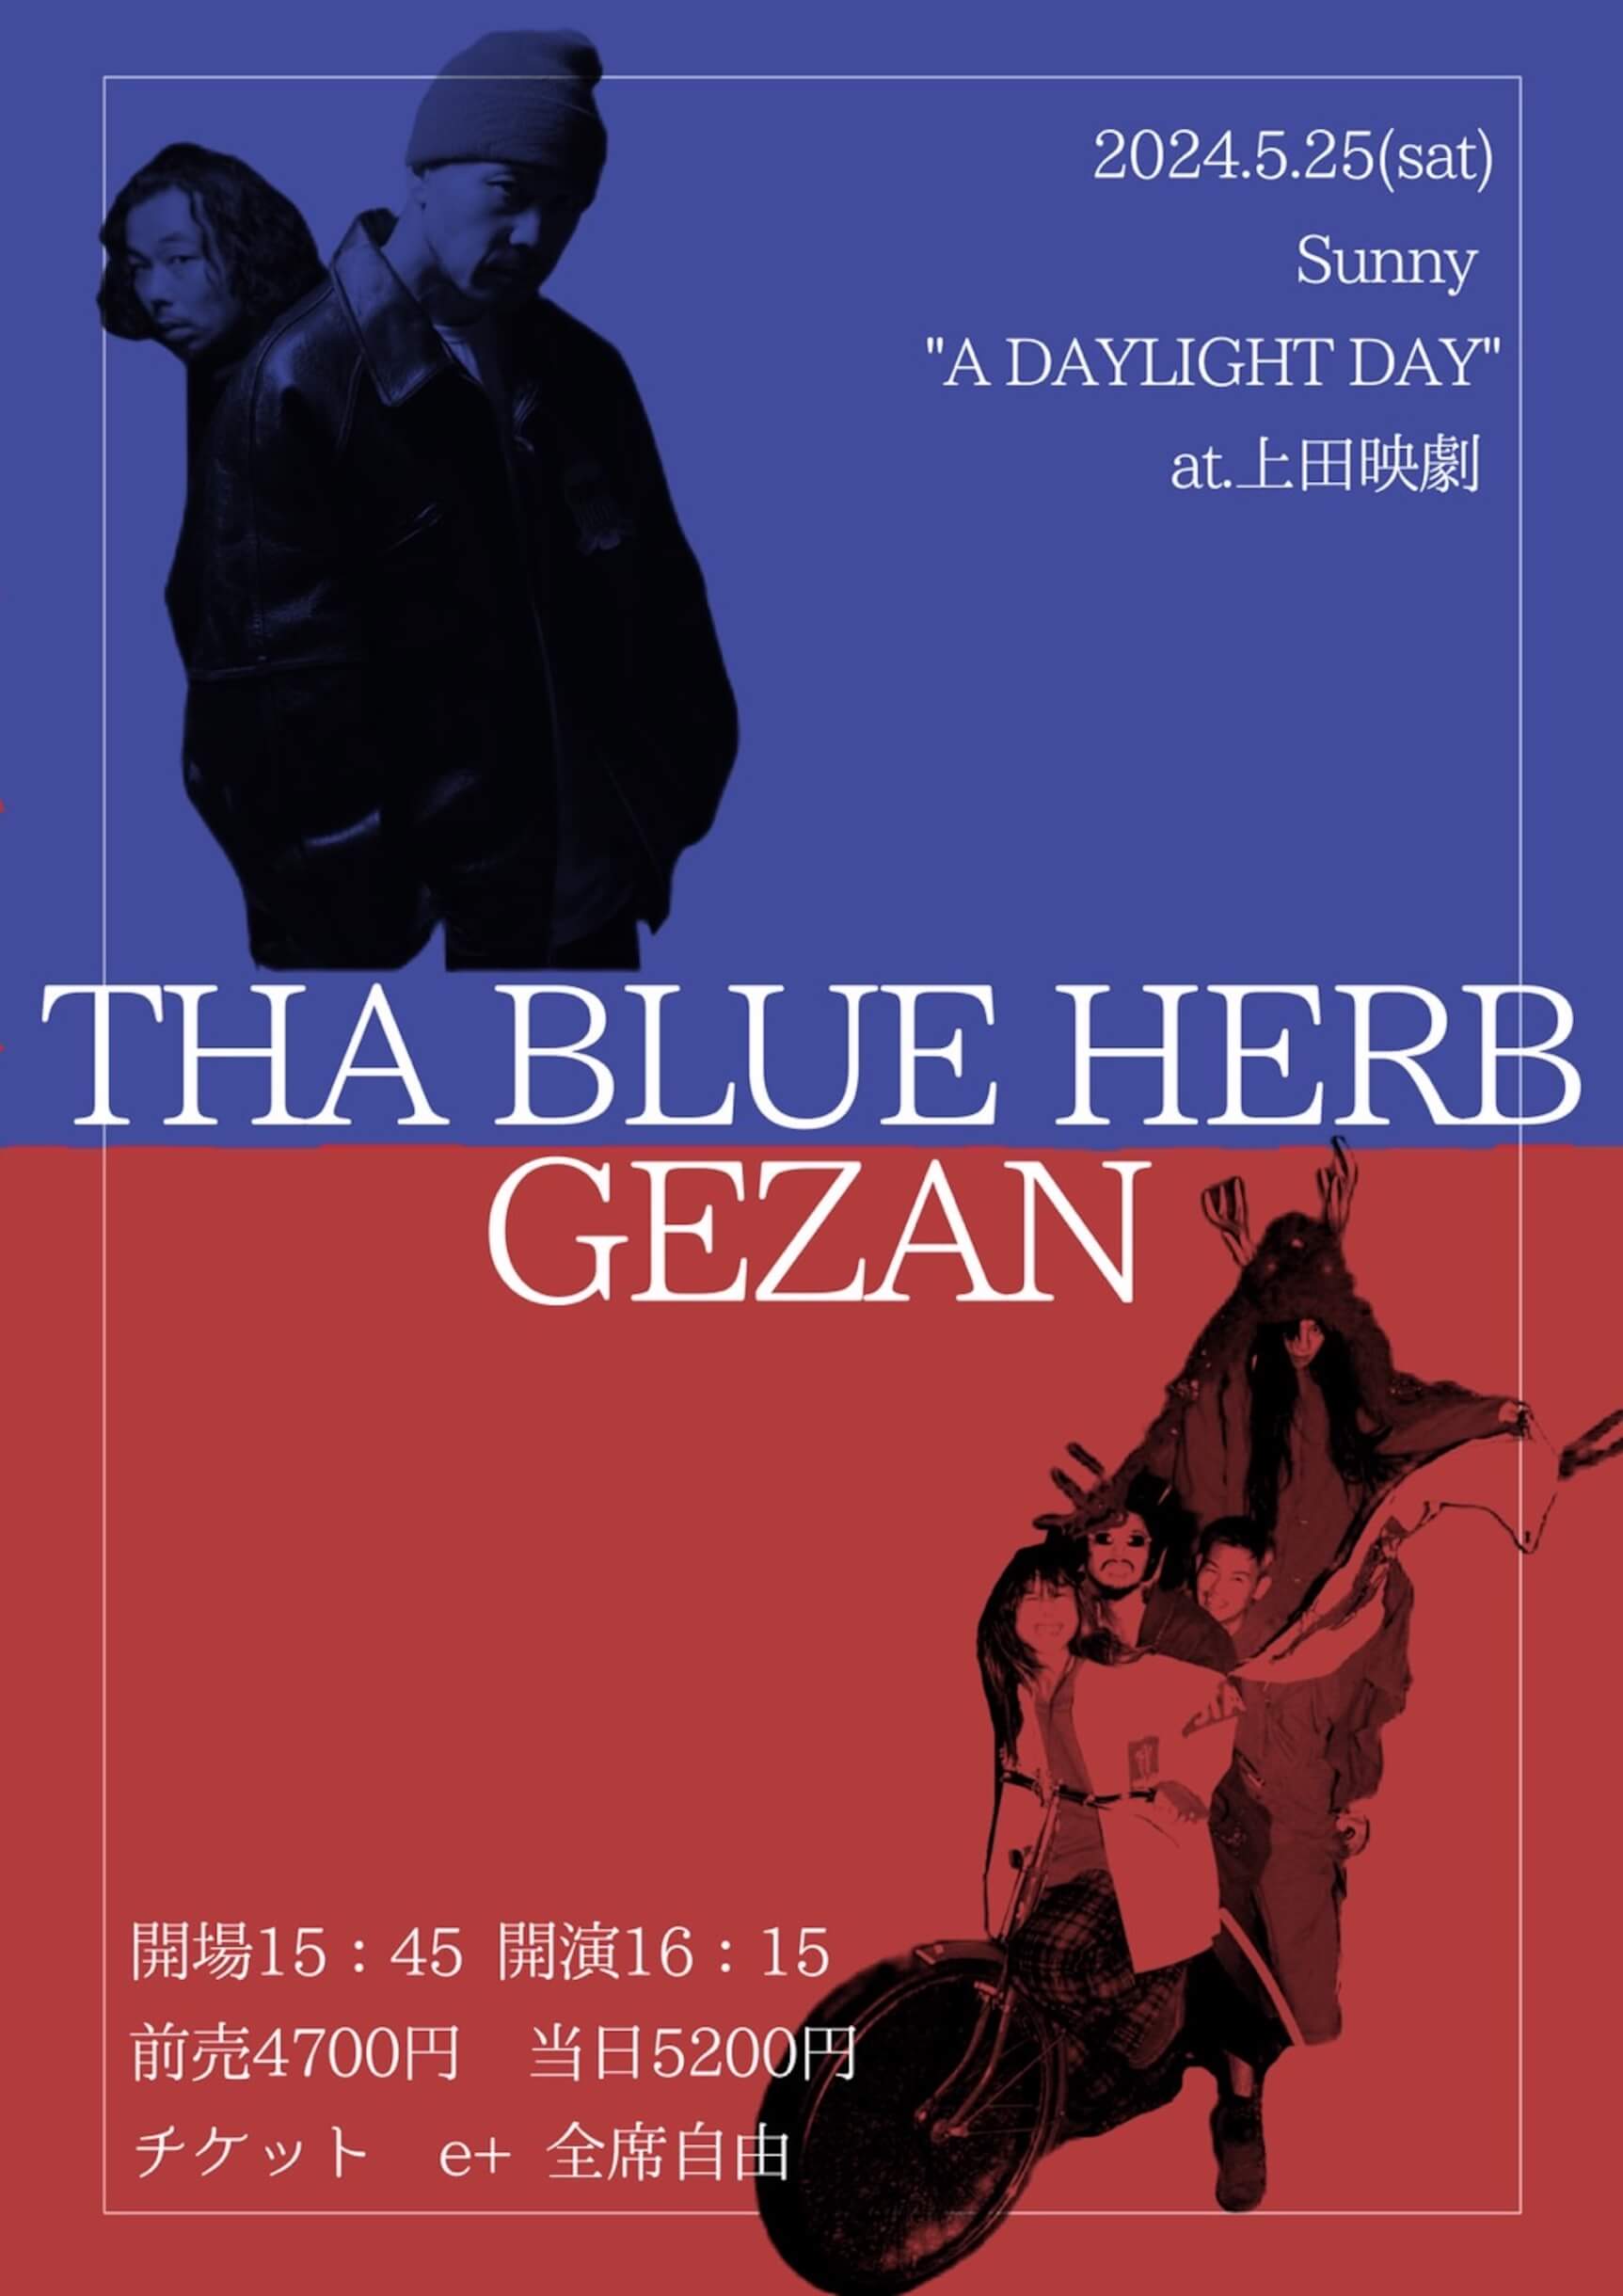 THA BLUE HERBとGEZANが長野県・上田の映画館で2マンショーを開催 music240315-tha-blue-herb-gezan1